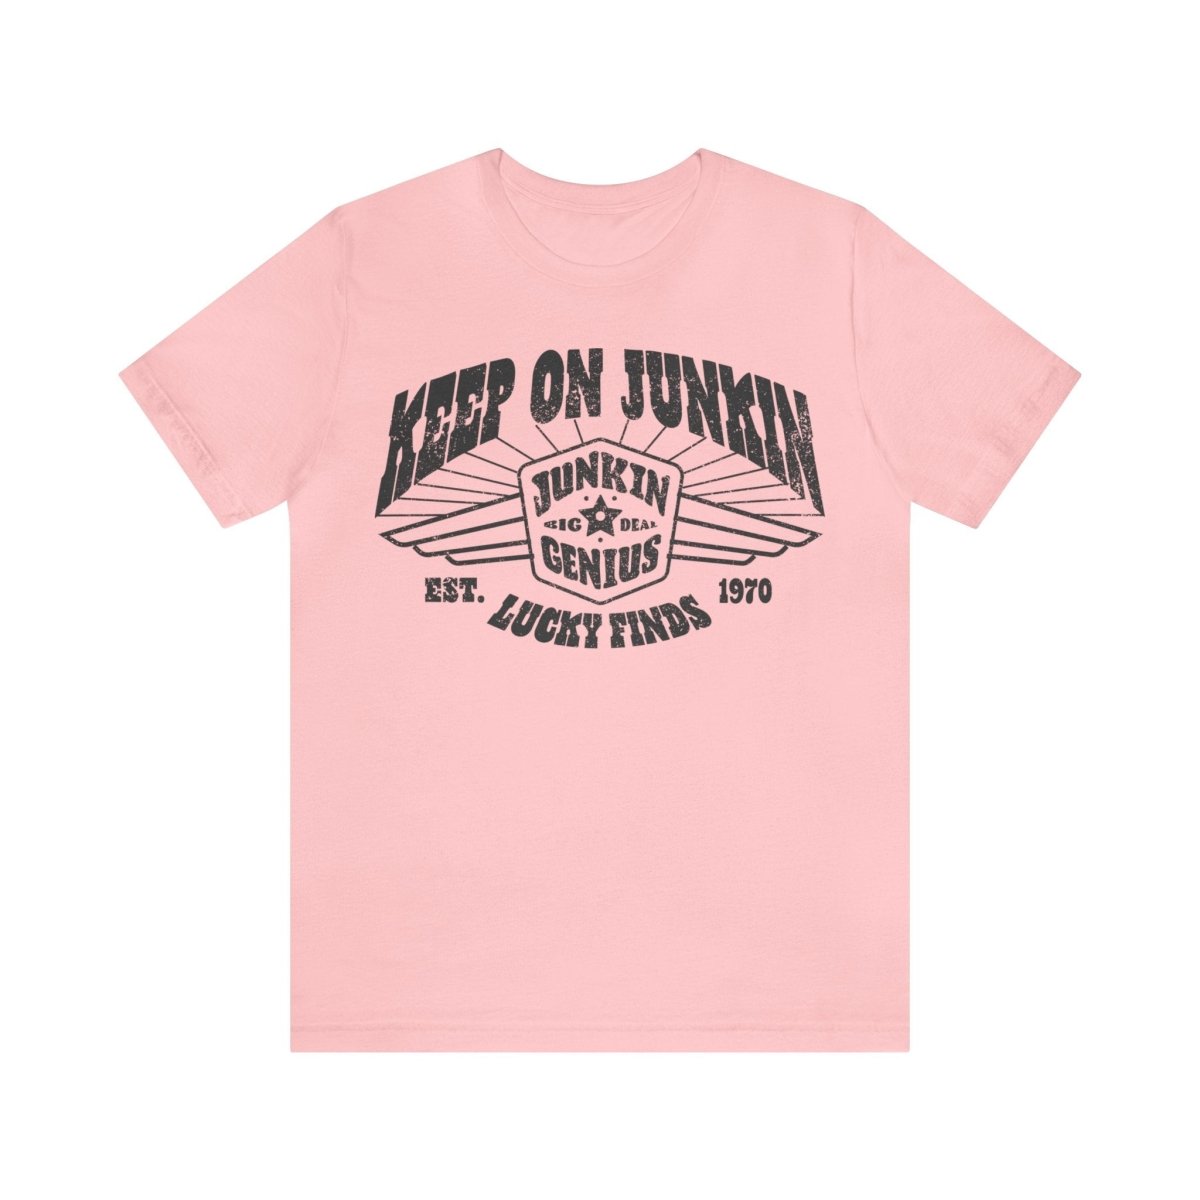 Keep On Junkin' Premium T-Shirt, Garage Sales, Flea Markets, Antiques, Junkin' Genius